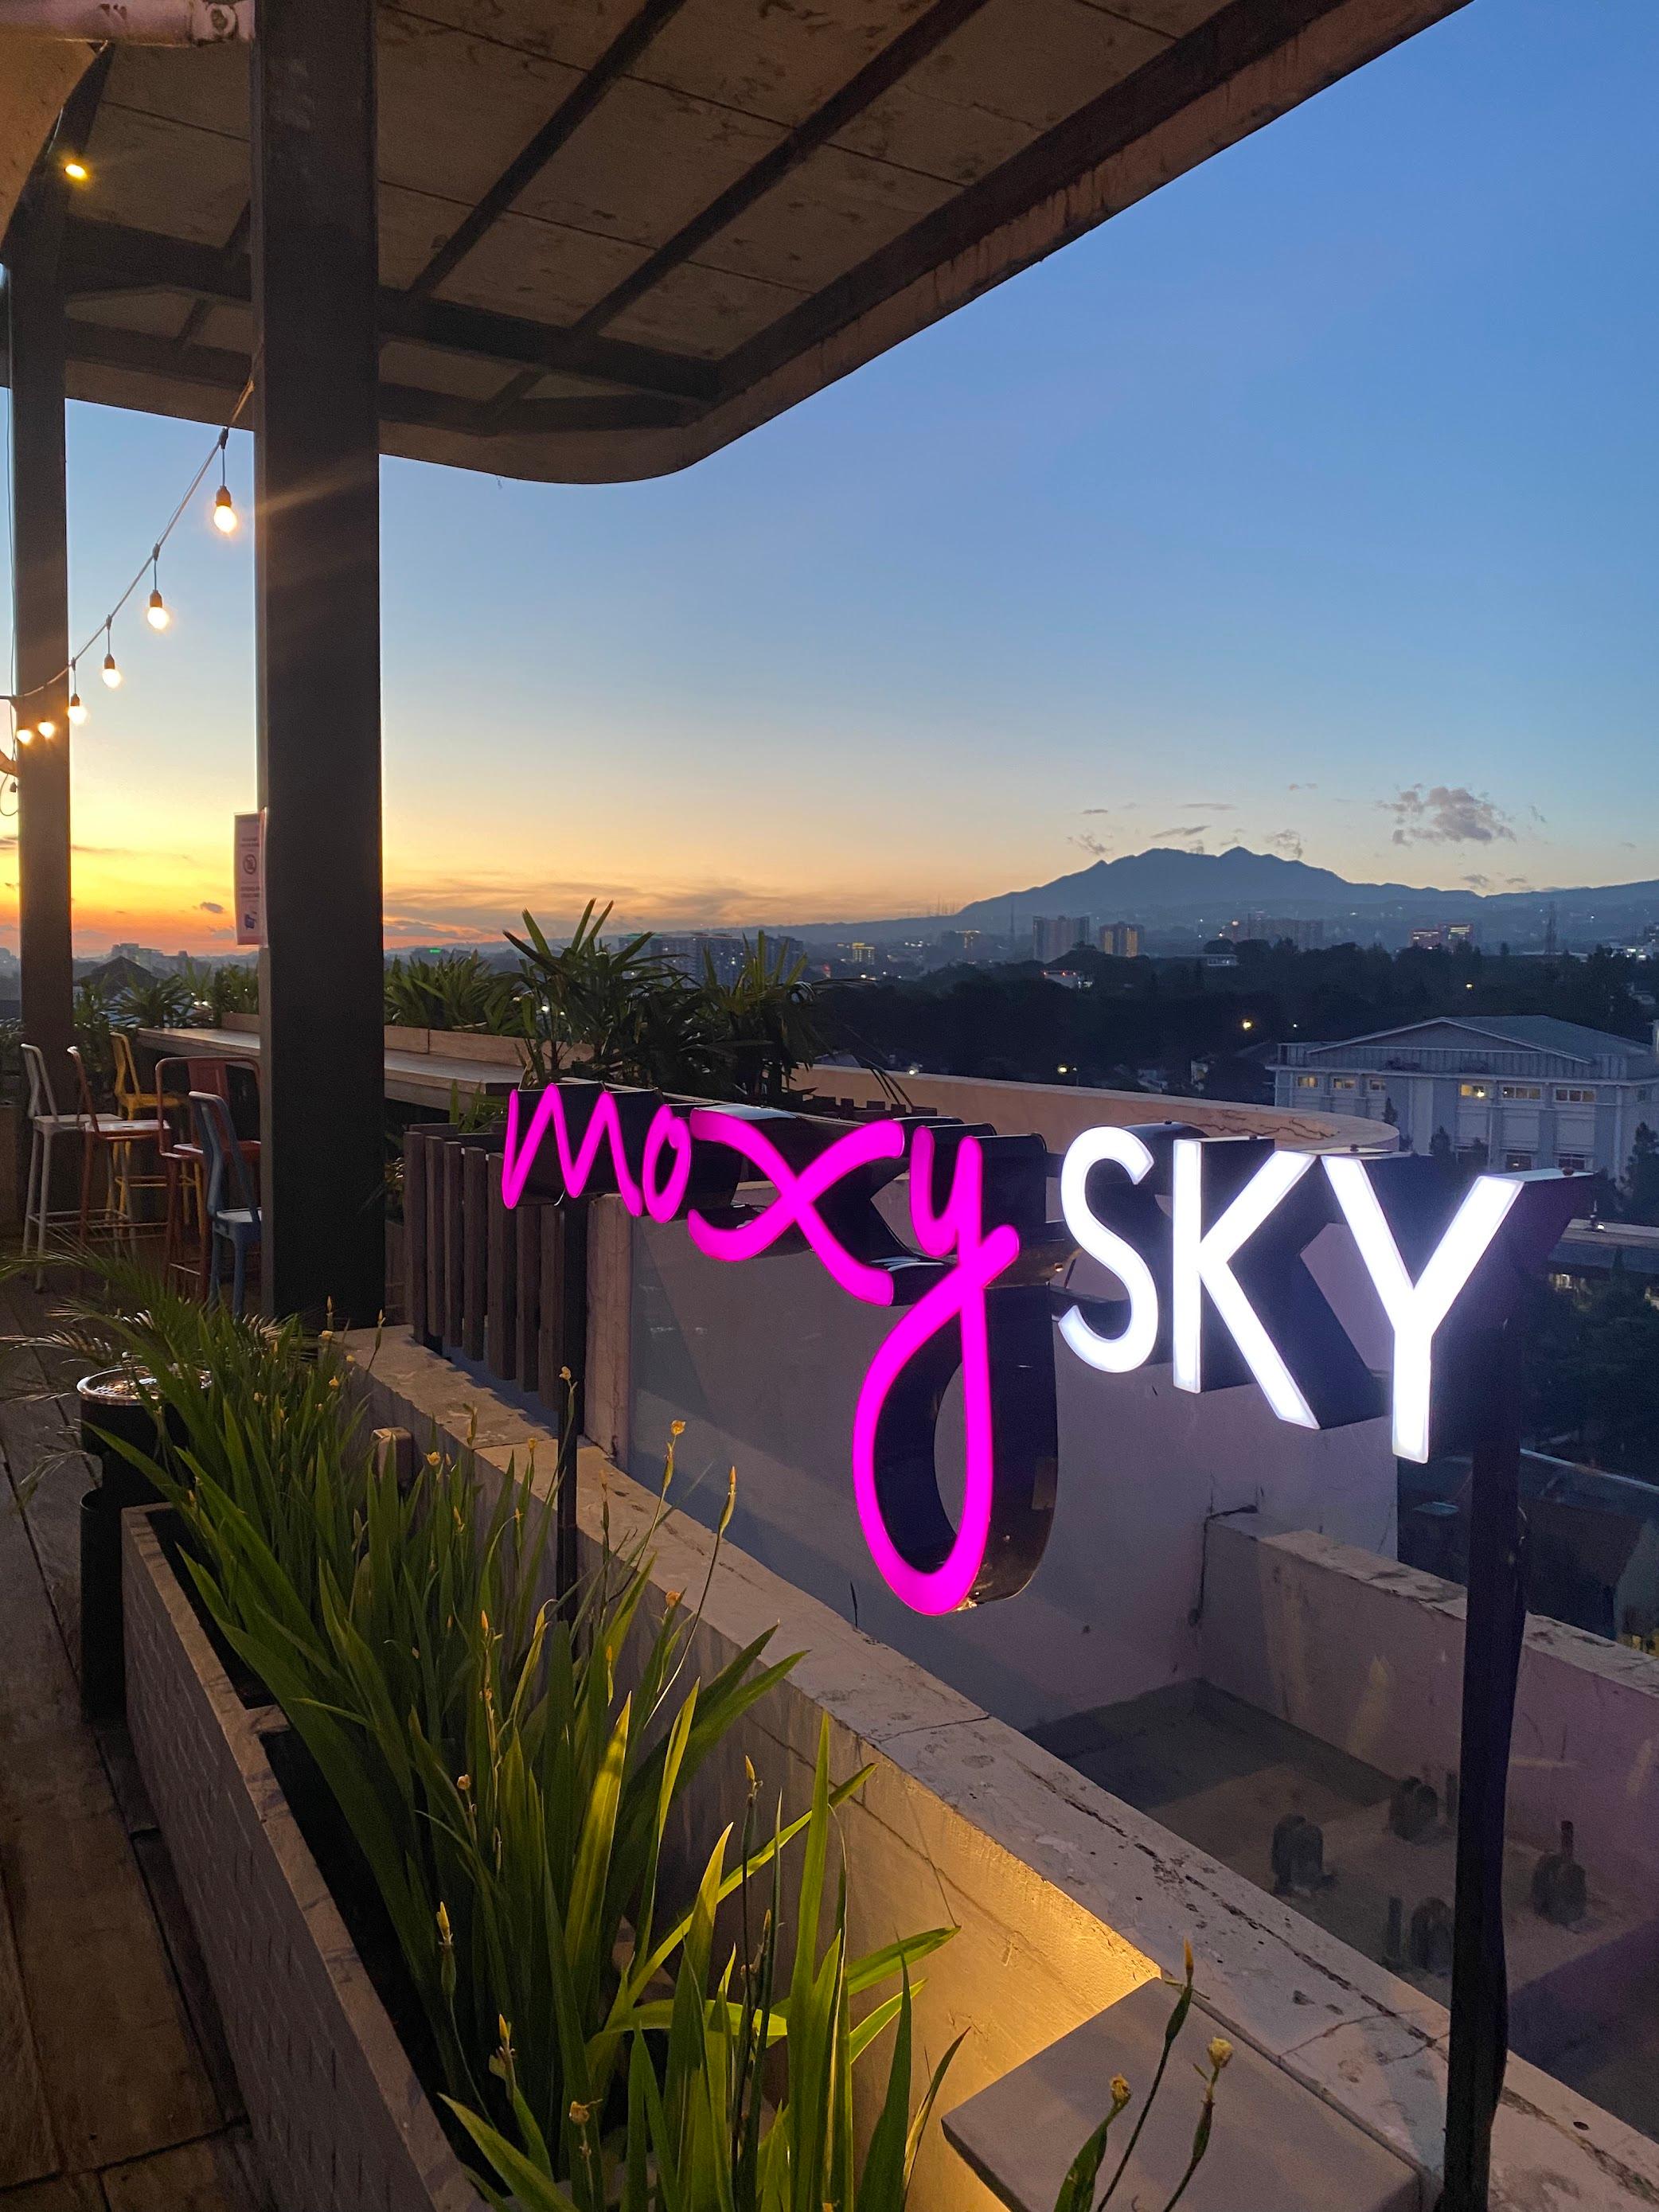 Moxy Sky Resto & Bar review